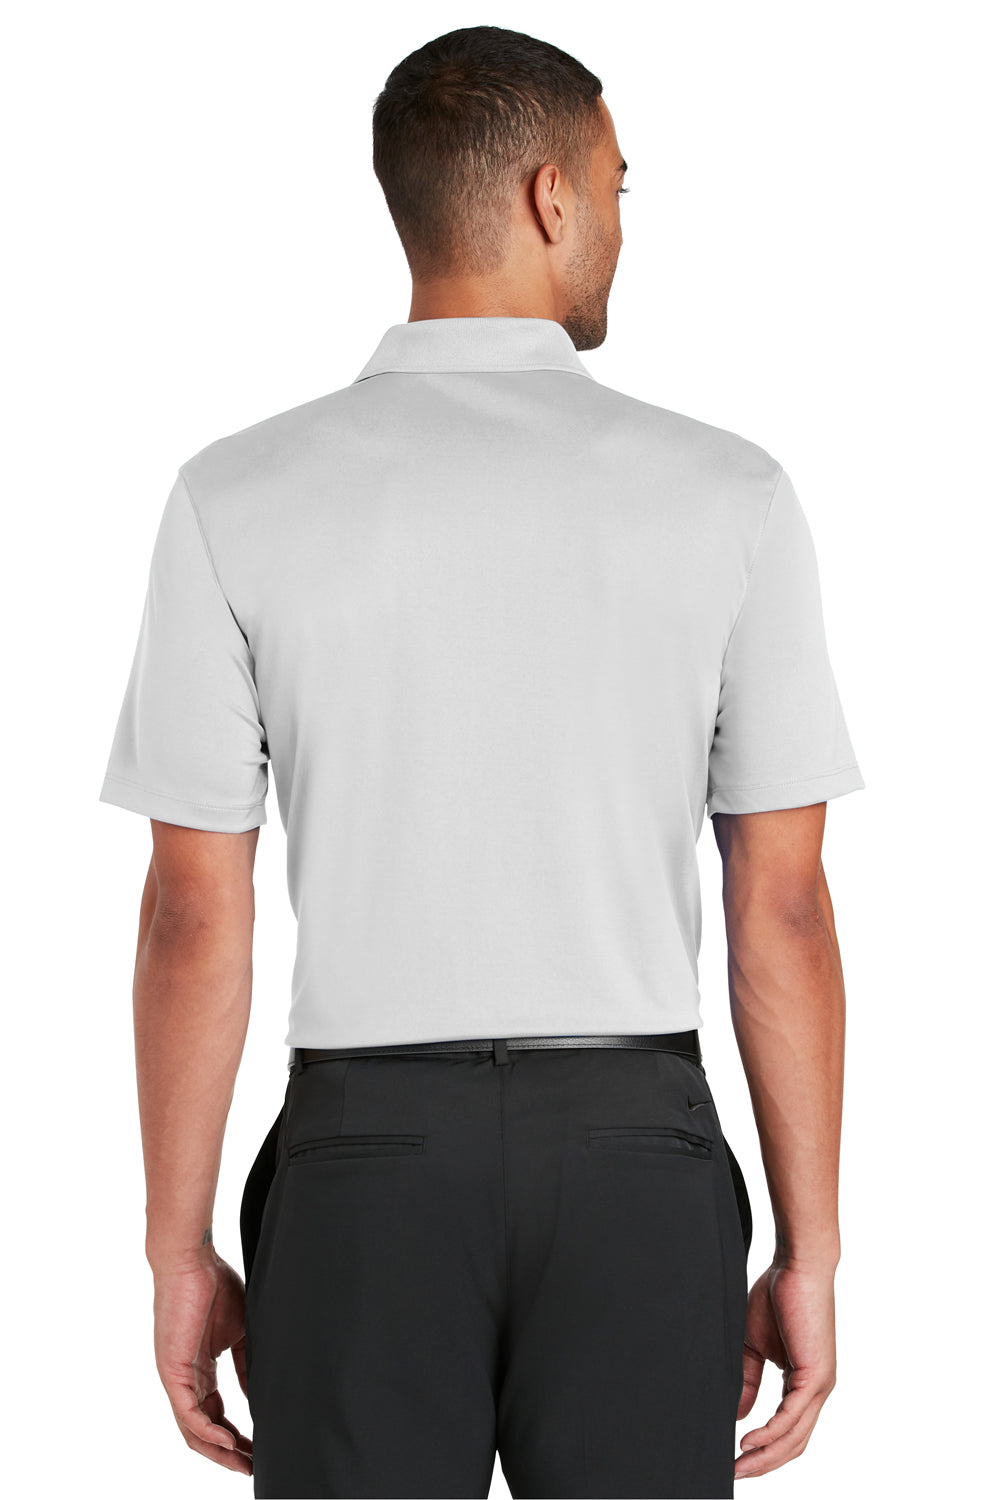 Nike 838956 Mens Players Dri-Fit Moisture Wicking Short Sleeve Polo Shirt White Model Back